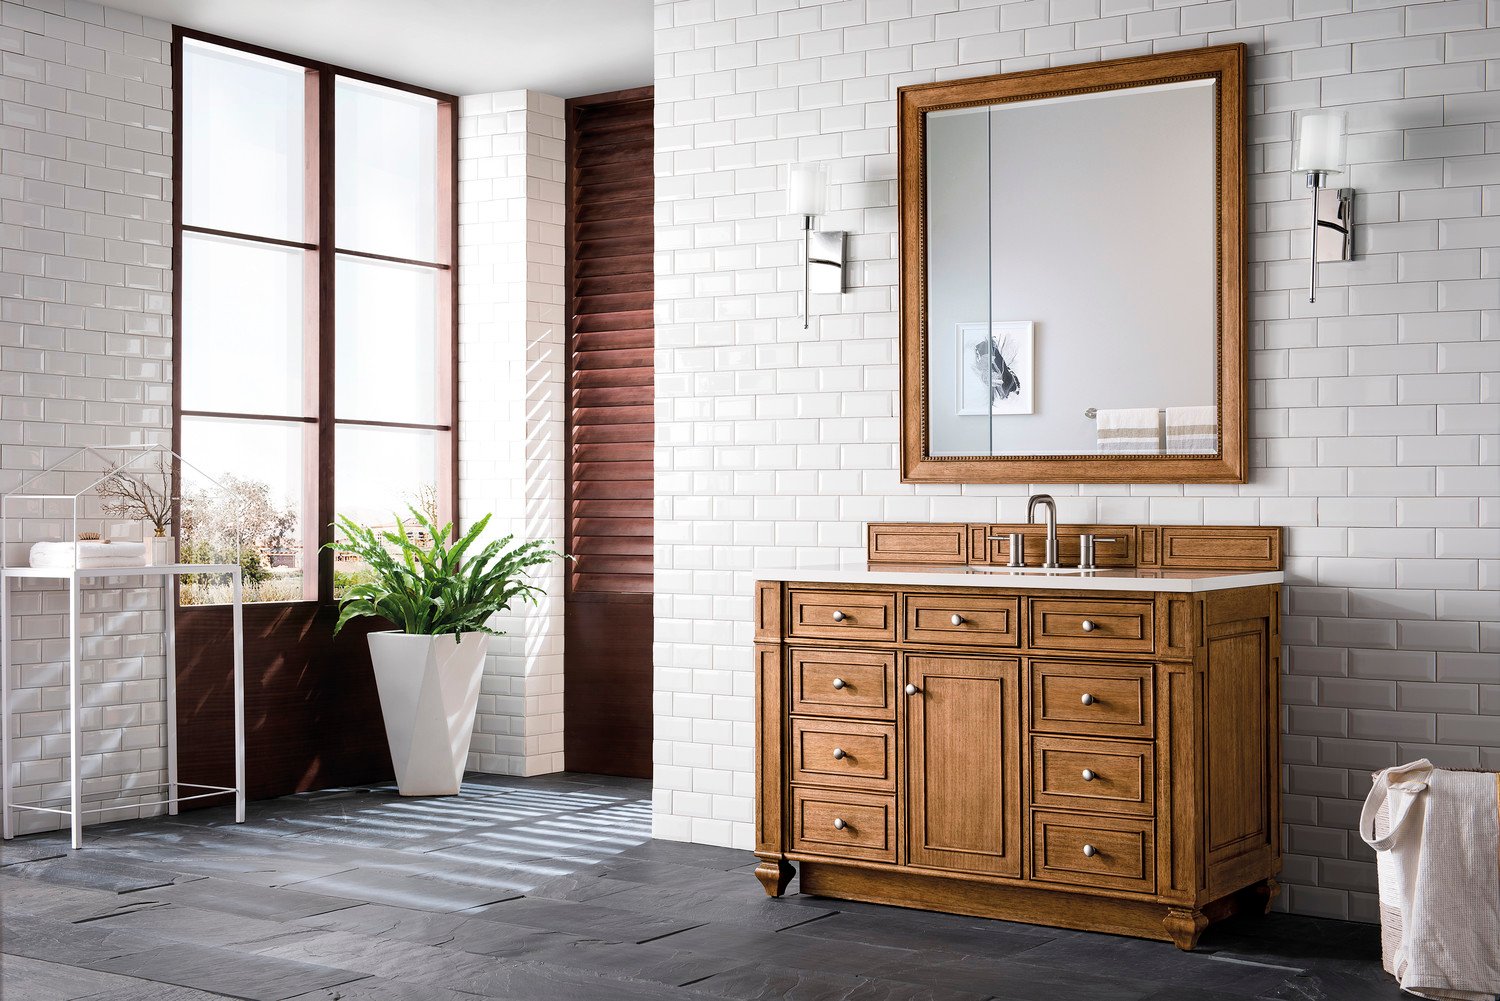  James Martin Vanity Bathroom Vanities Saddle Brown Transitional